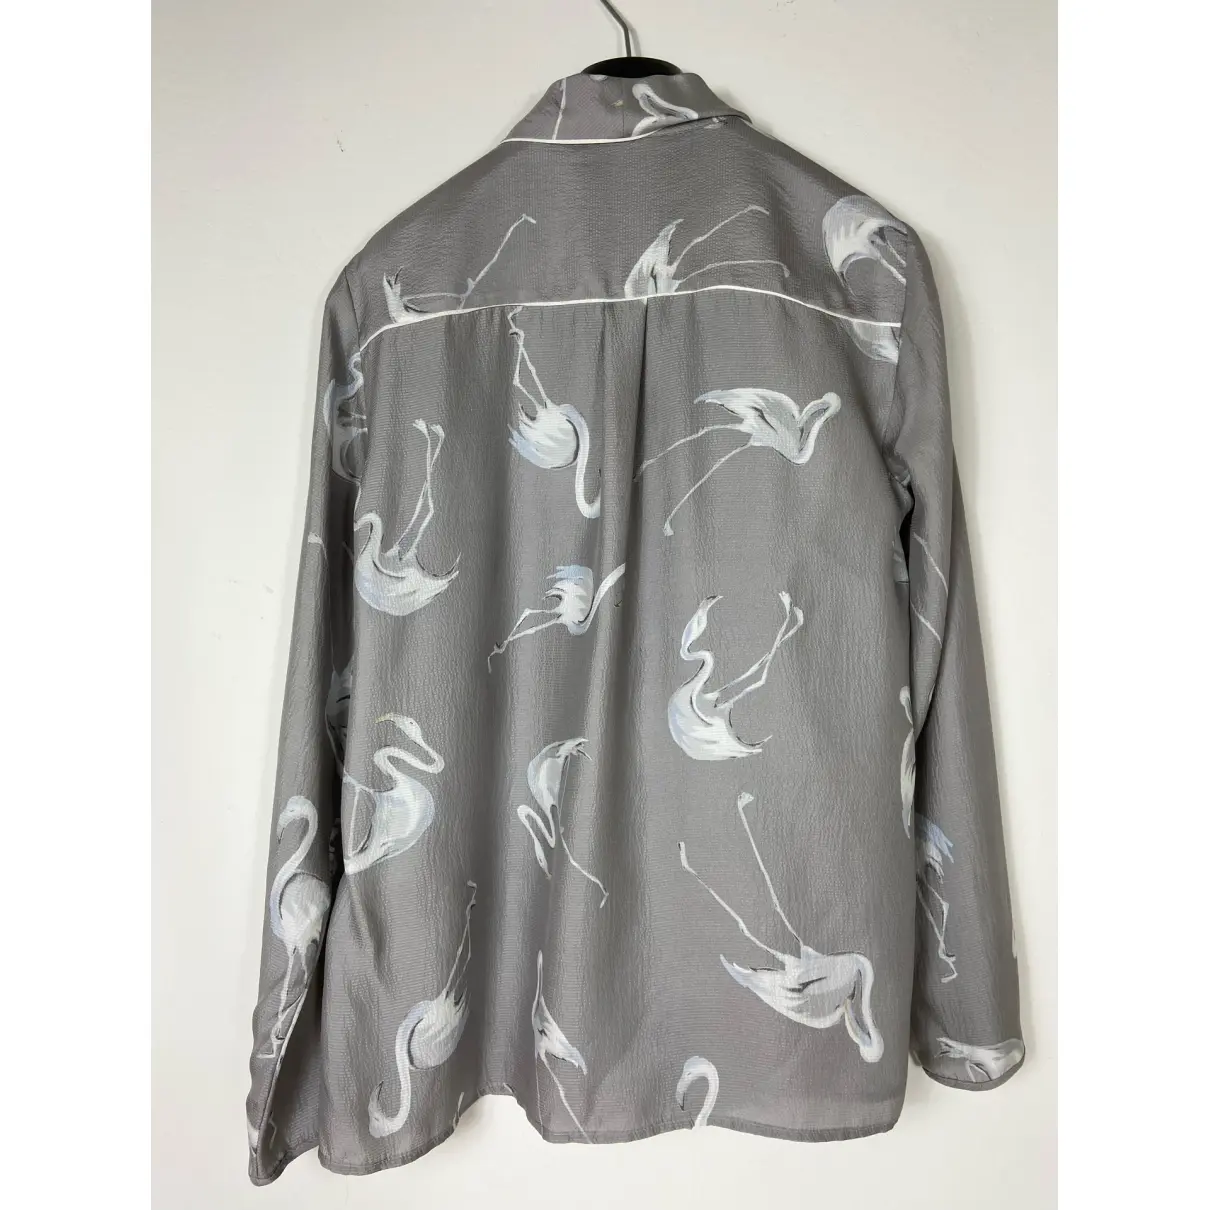 Buy PENNYBLACK Silk shirt online